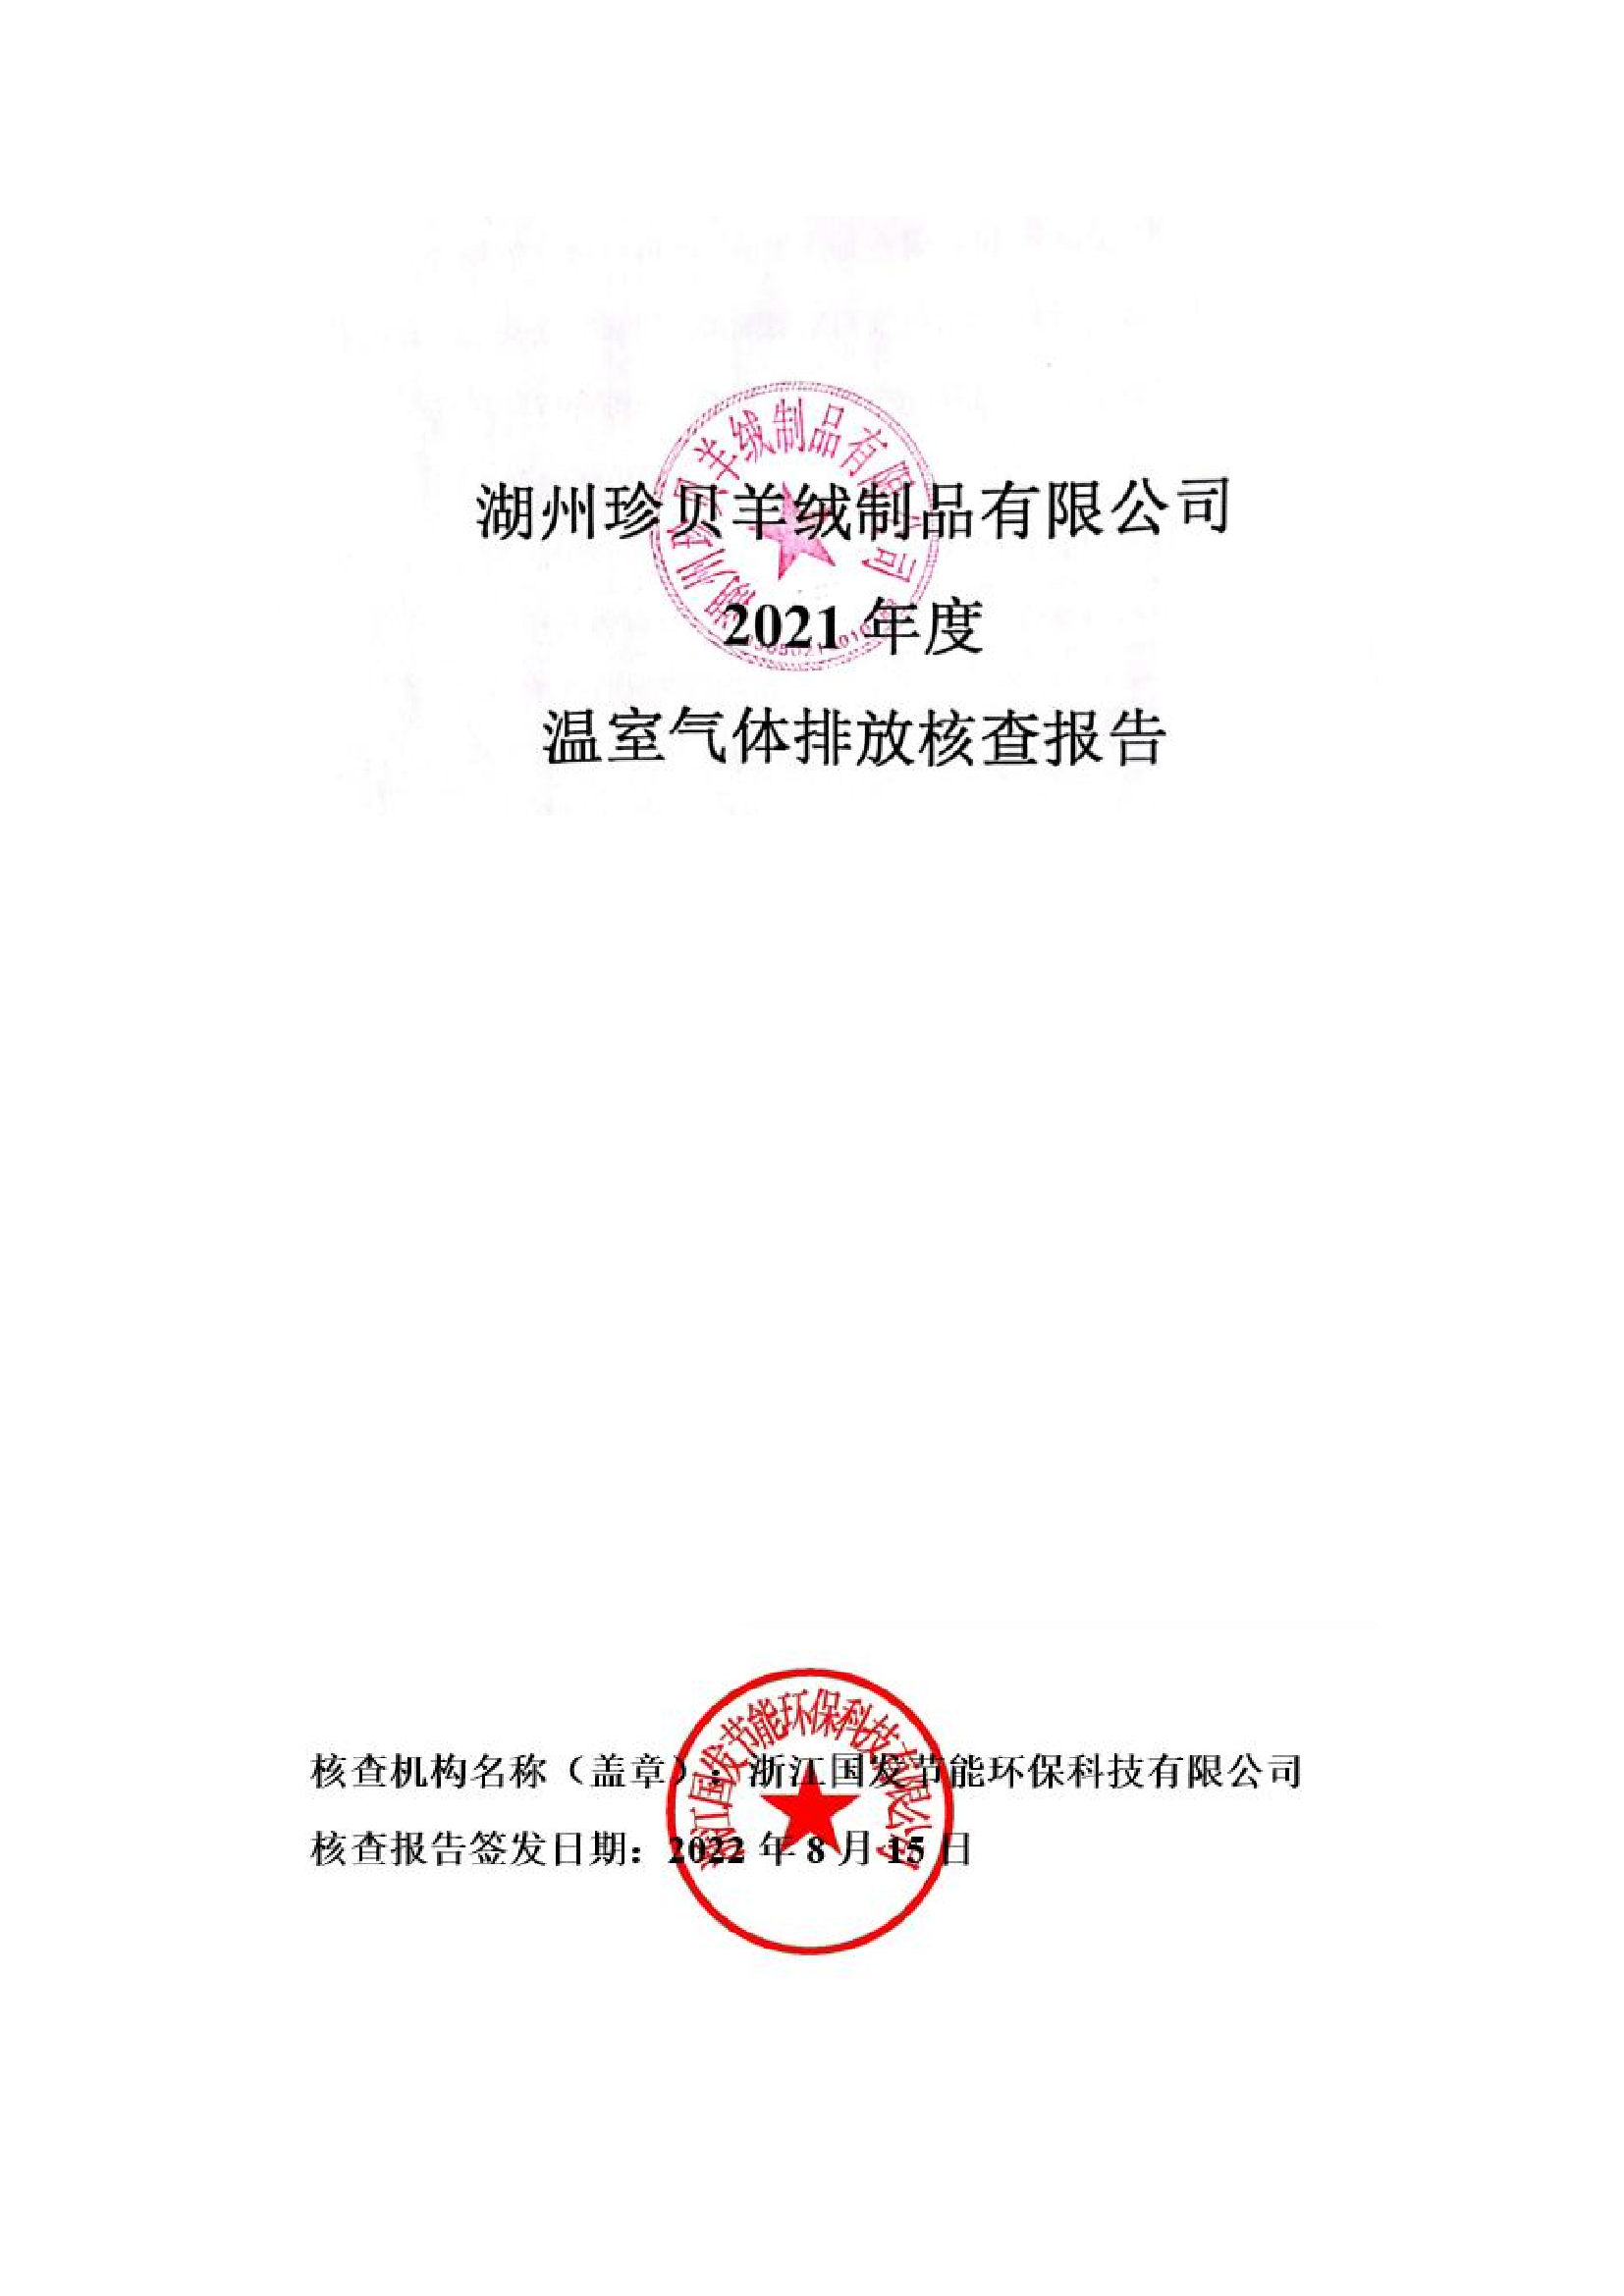 Greenhouse Gas Verification Report of Huzhou Zhenbei Cashmere Products Co., Ltd